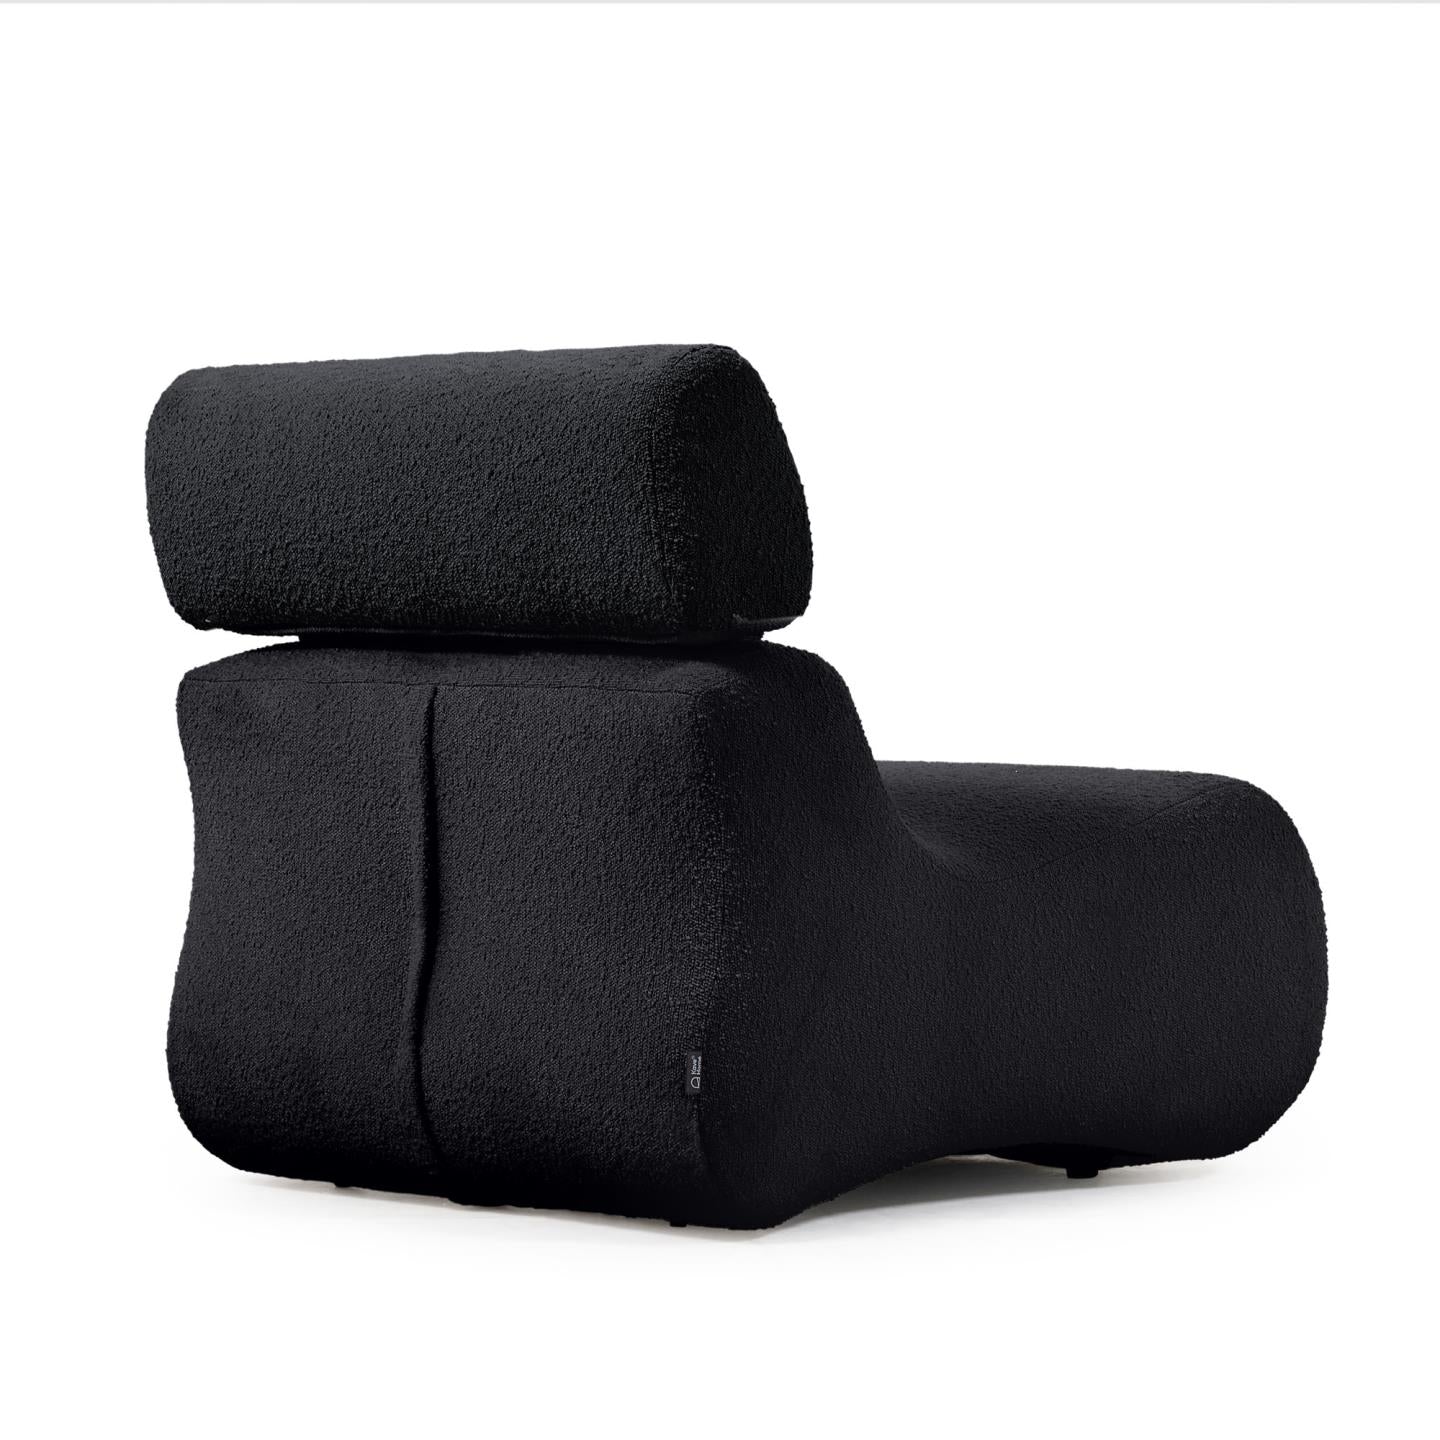 Club armchair in black fleece